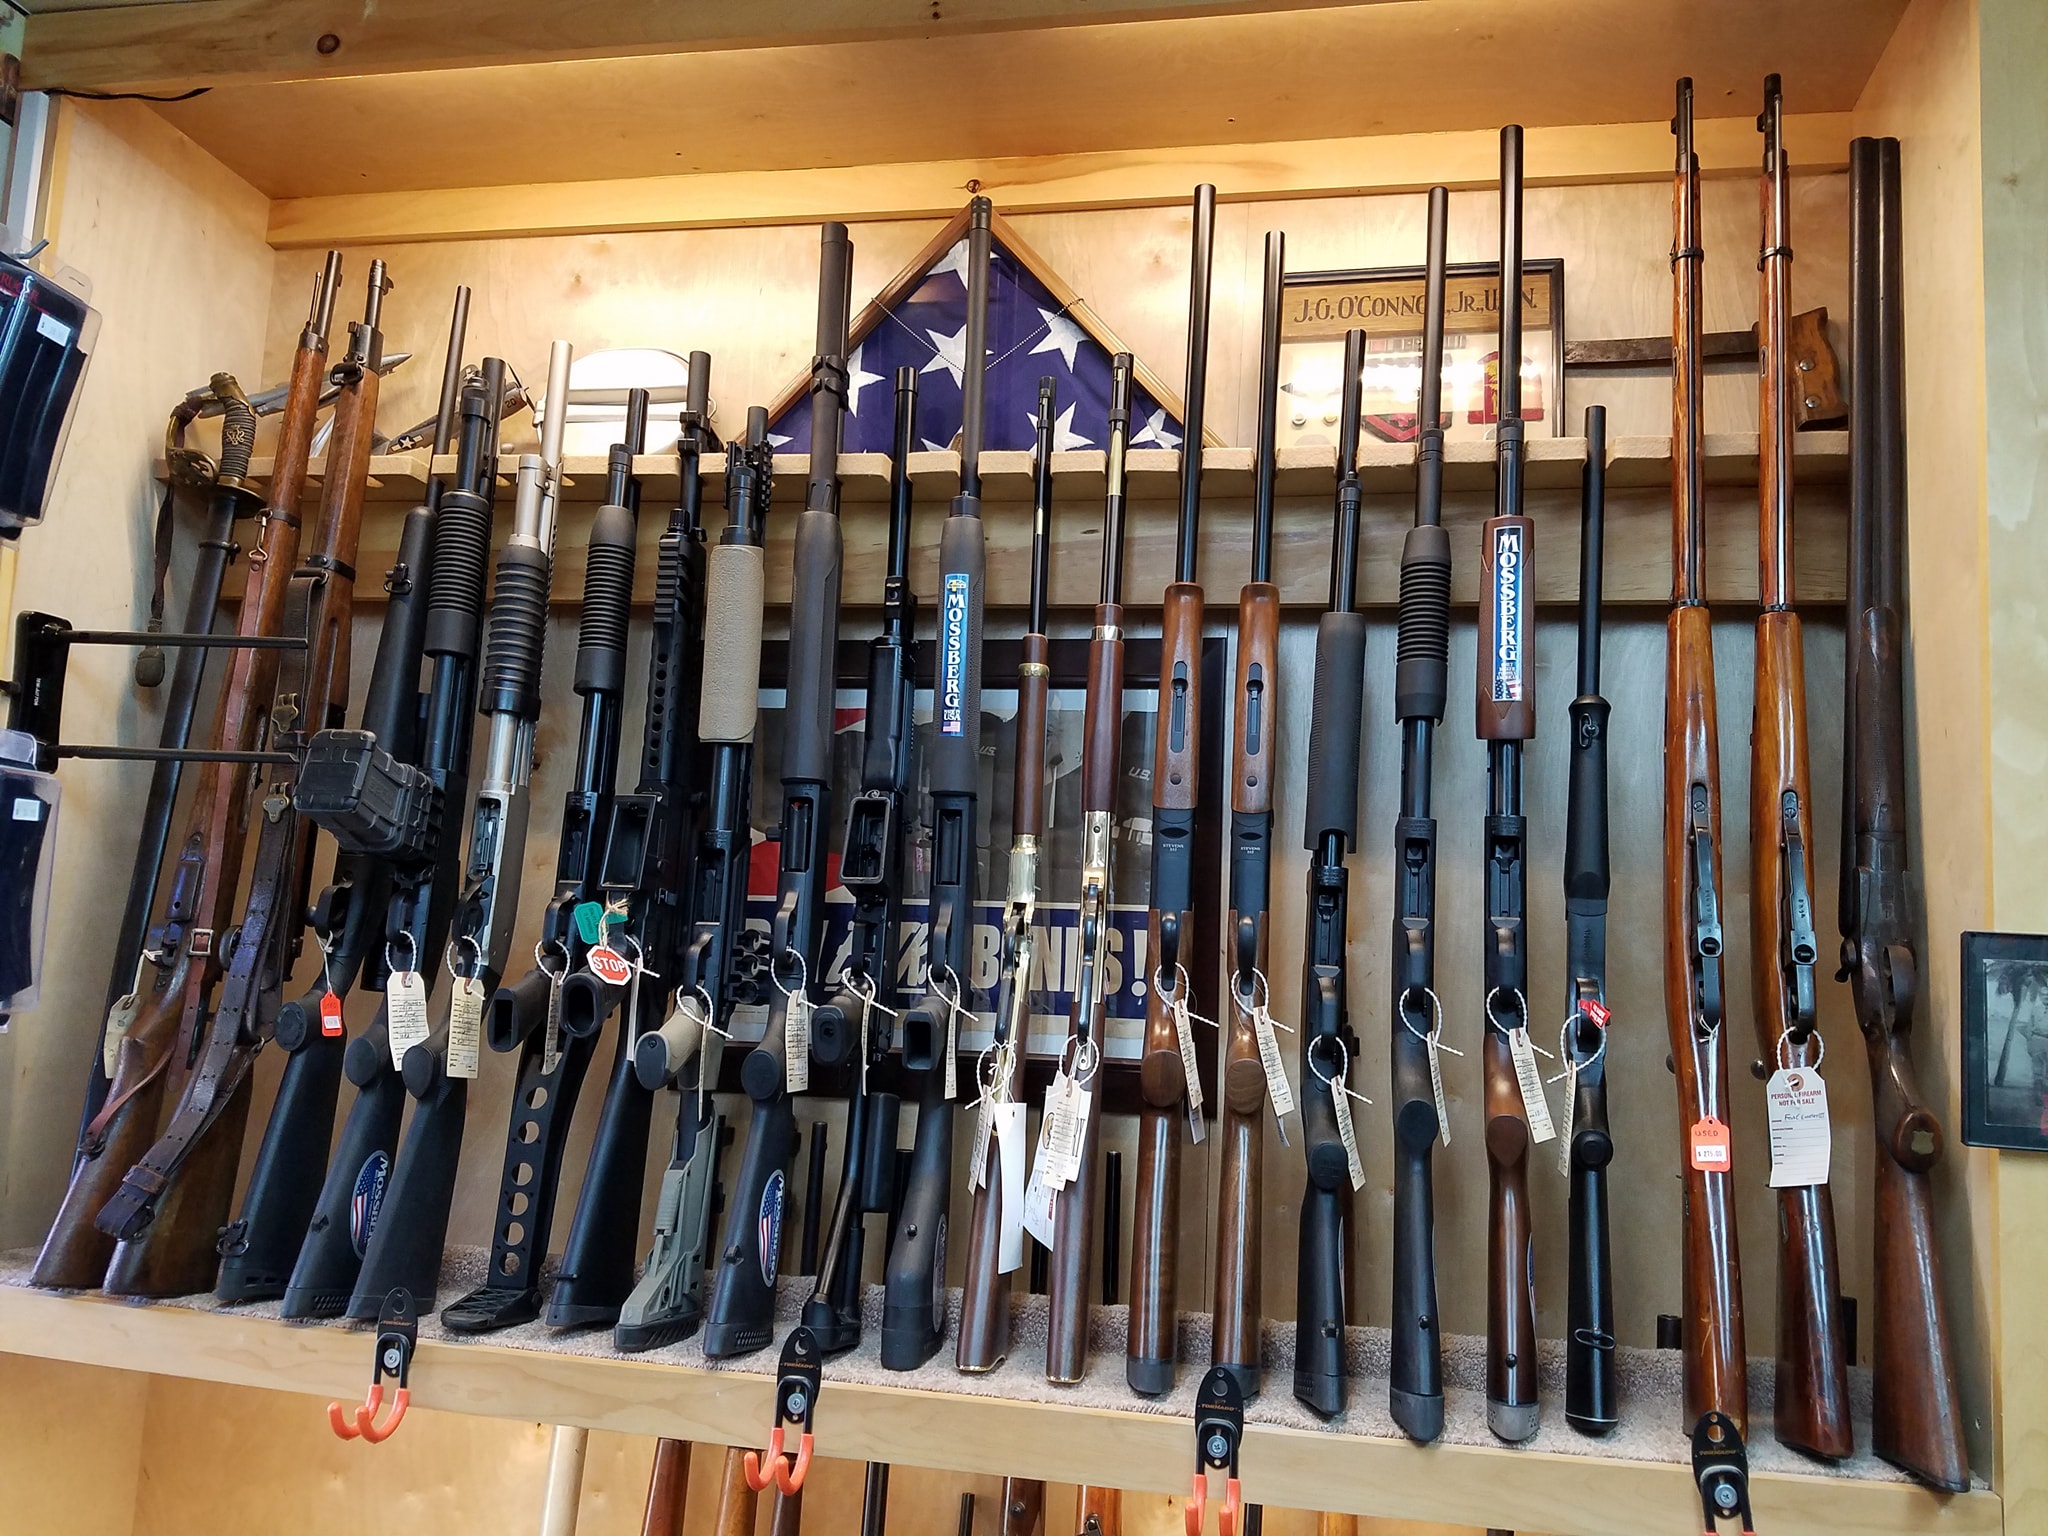 Long Gun Rack 2 (We stock up on hunting rifles during hunting season)